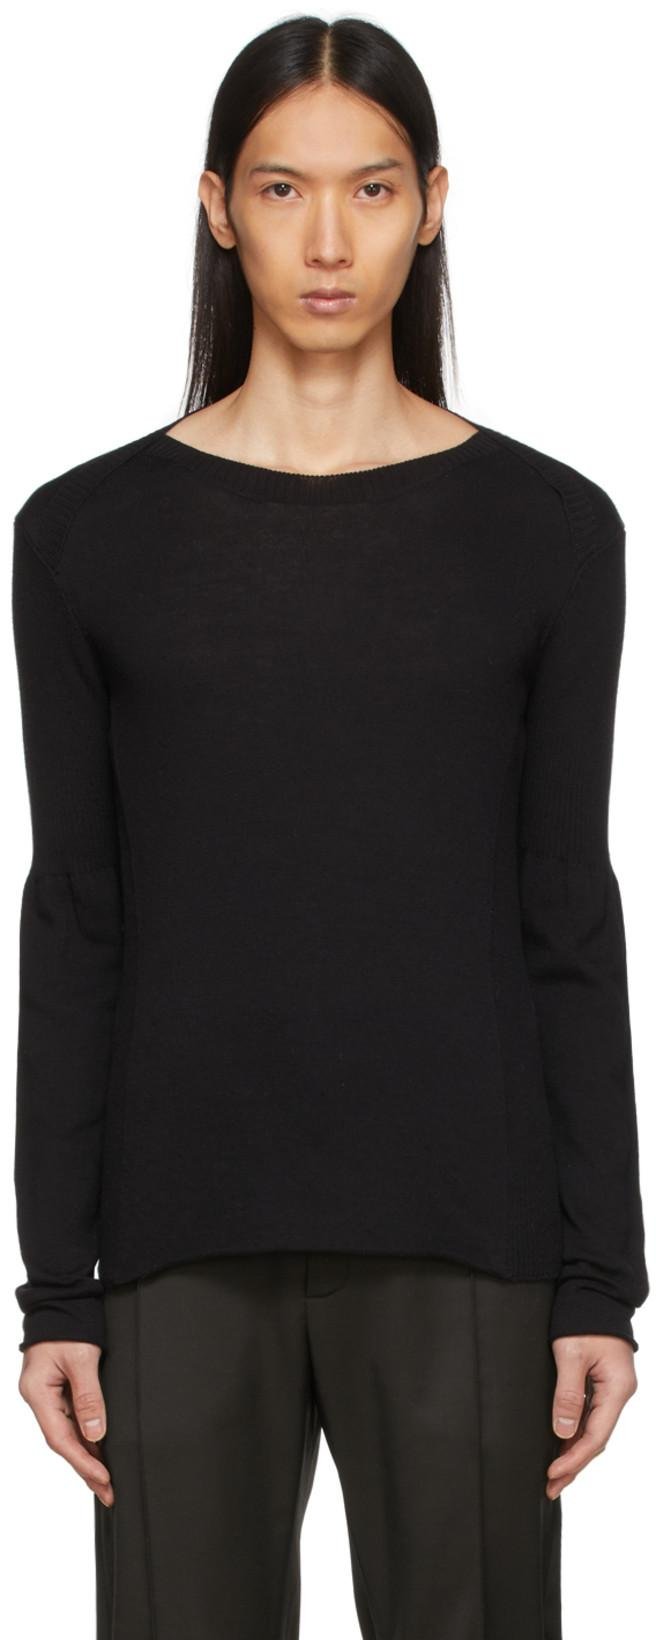 SSENSE Exclusive Black Milano Long Sleeve T-Shirt by ADYAR